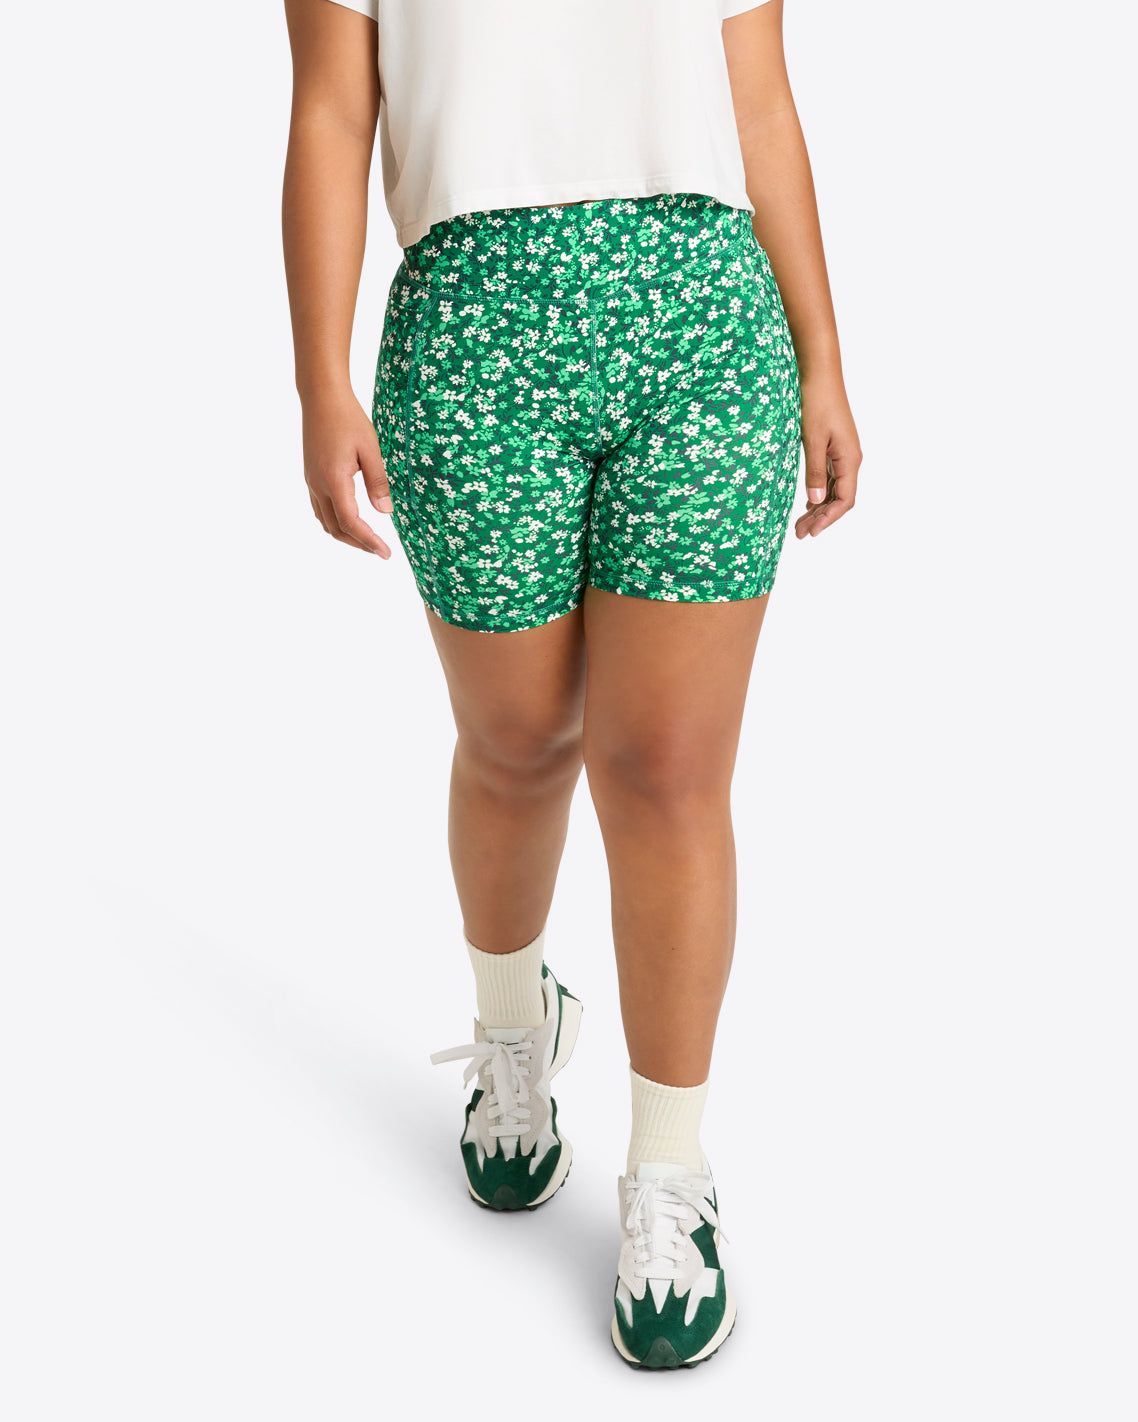 Bike Shorts in Green Wildflower Ditsy | Draper James (US)